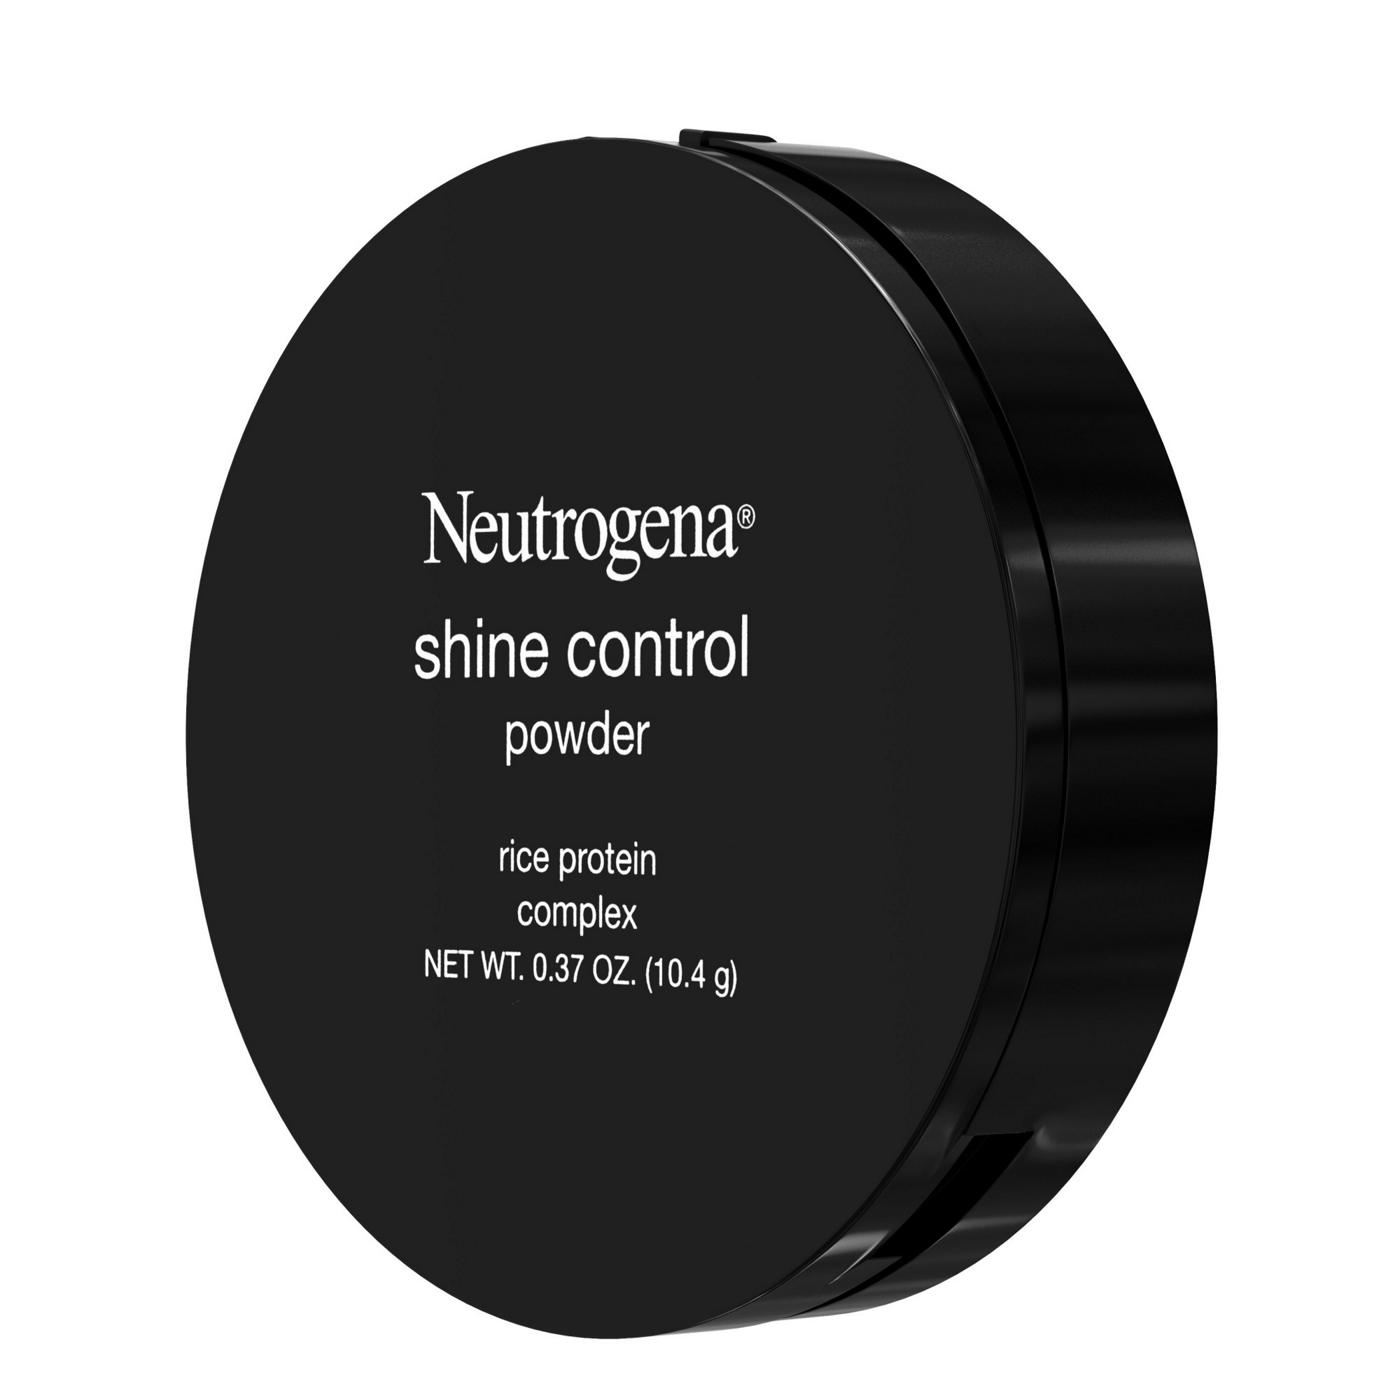 Neutrogena Shine Control Powder; image 2 of 6